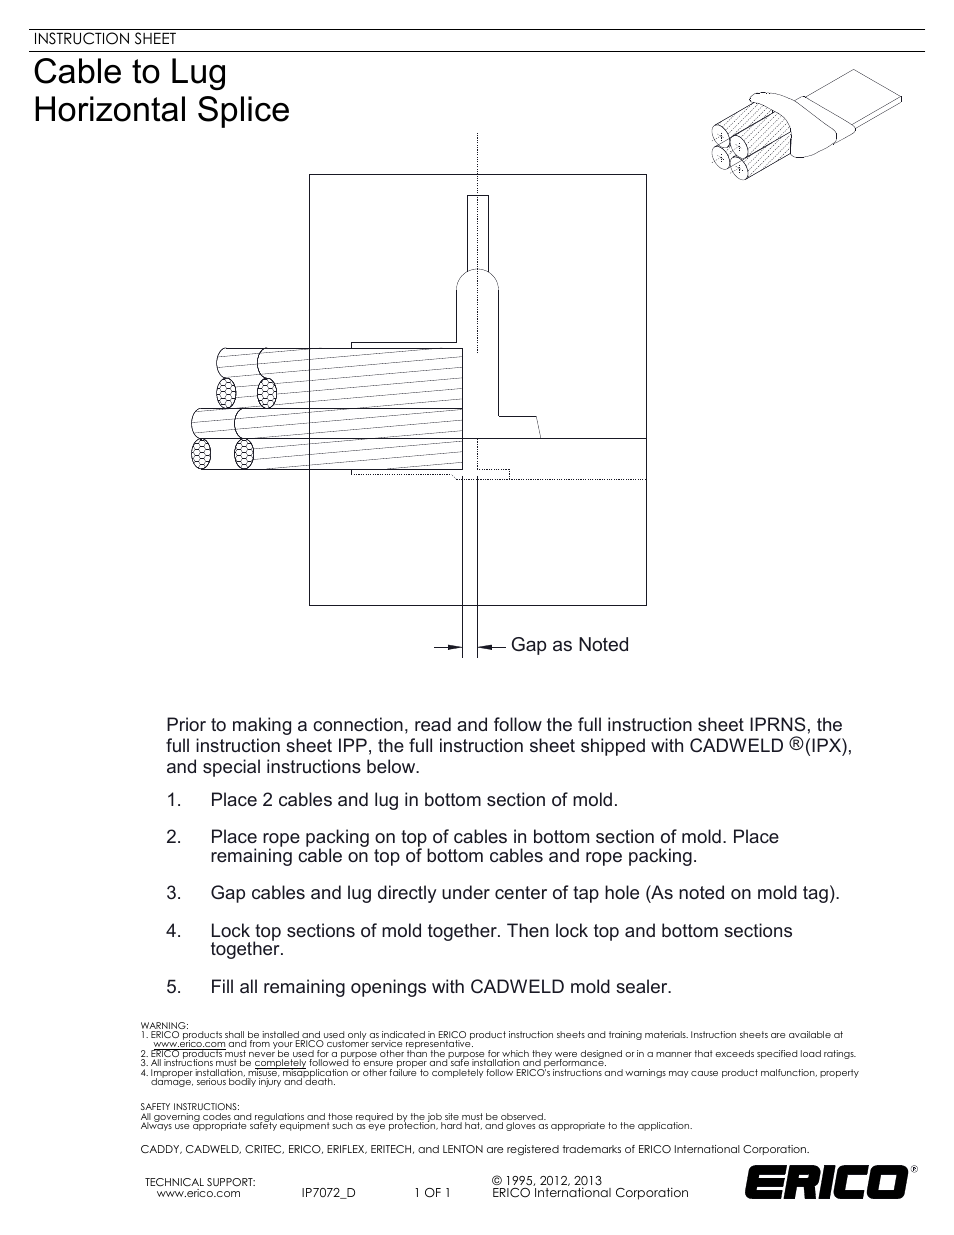 IP7072 D Cable to Lug Horizontal Splice